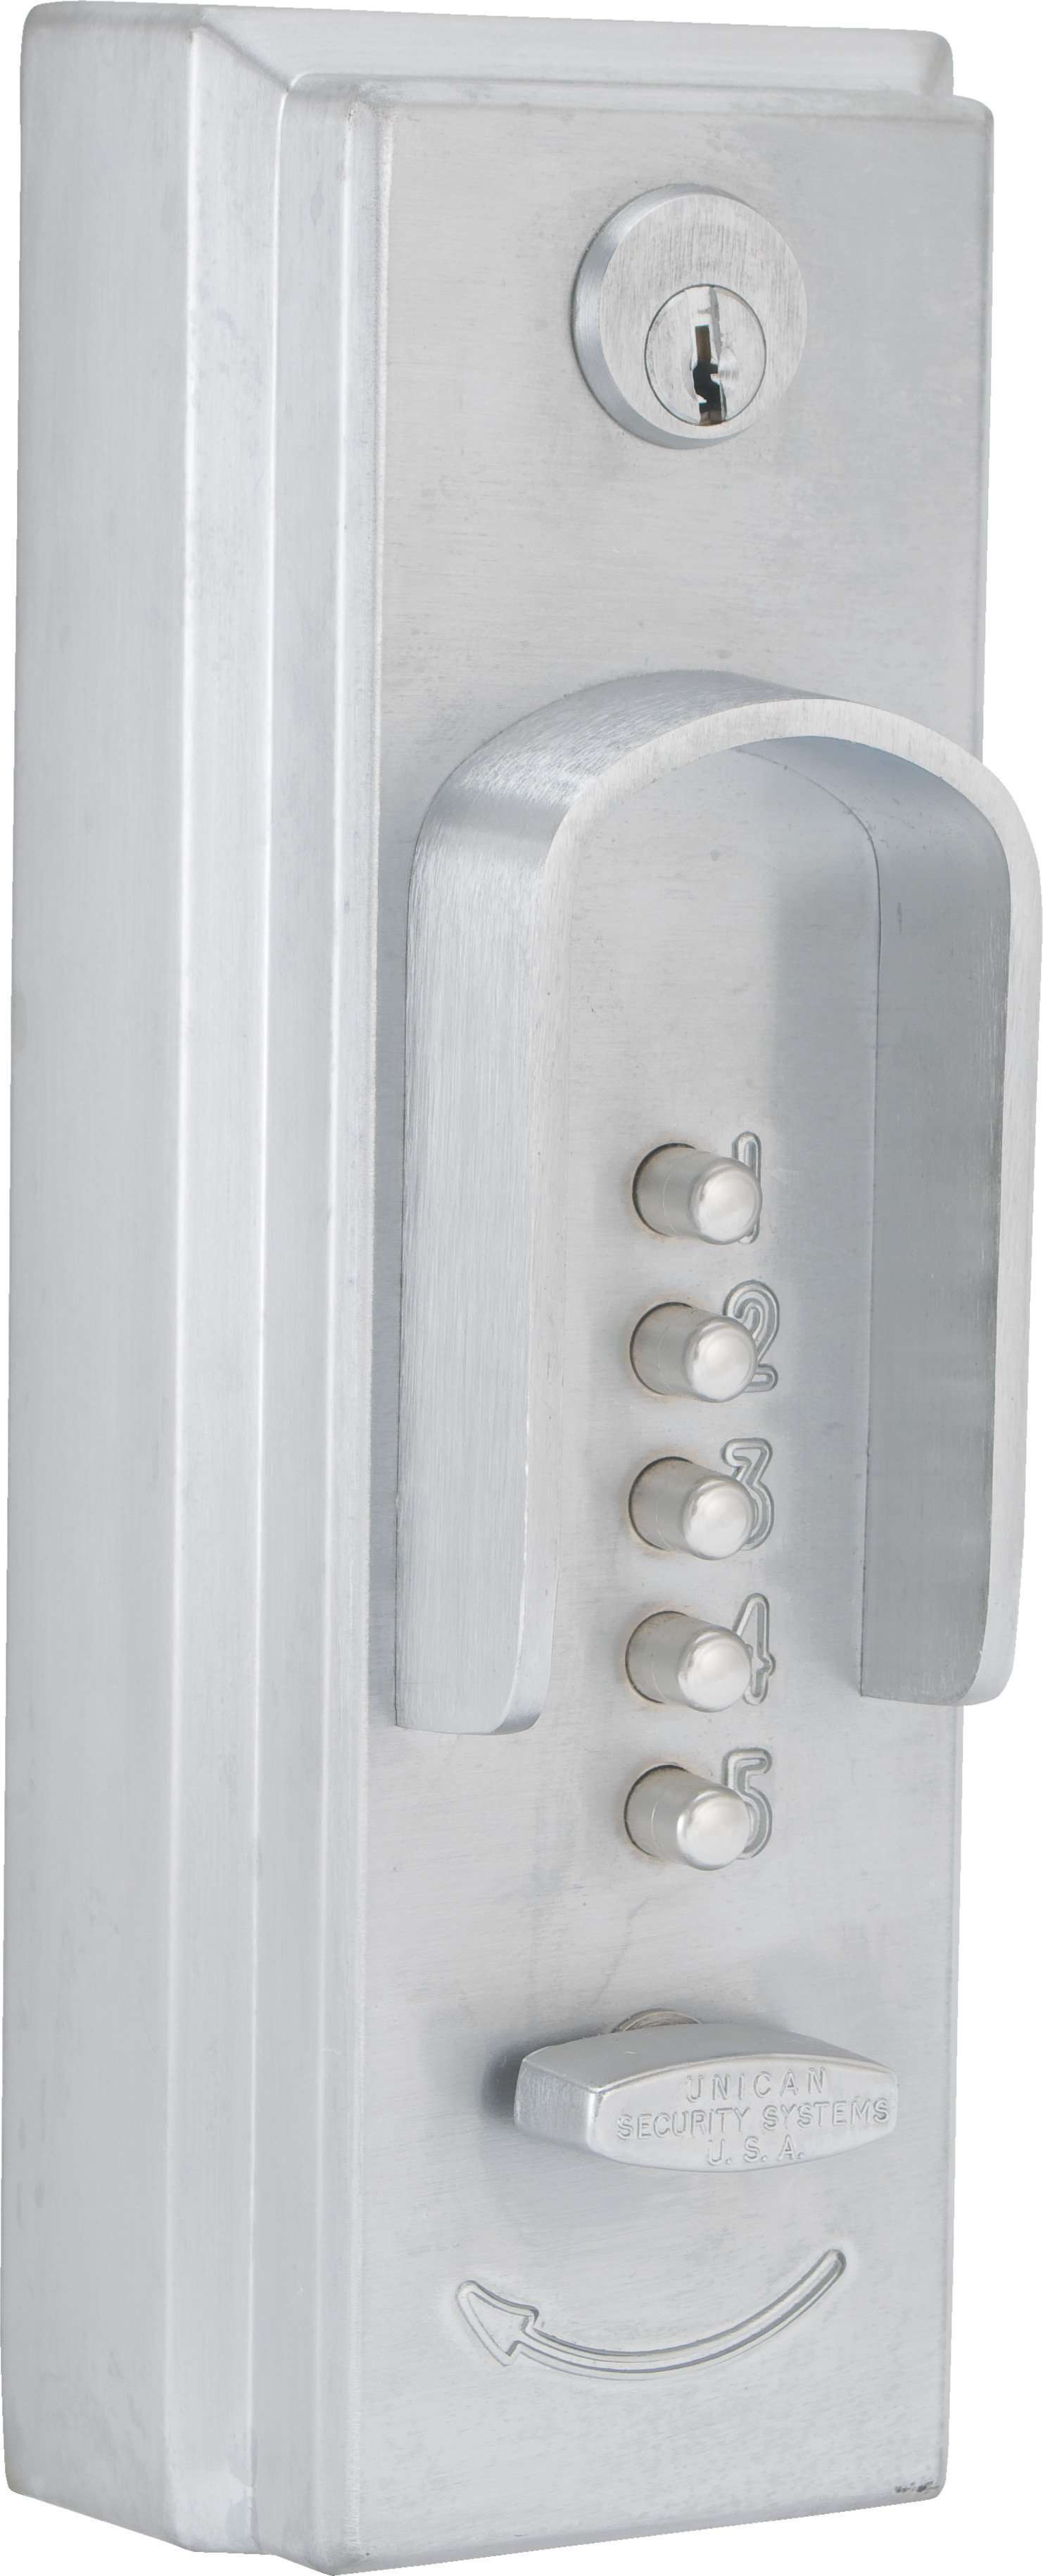 Simplex 2015 - Mechanical Pushbutton Exit Trim Lock - Combination Entry w/ Thumbturn Style Knob - 26D - Satin Chrome - UHS Hardware